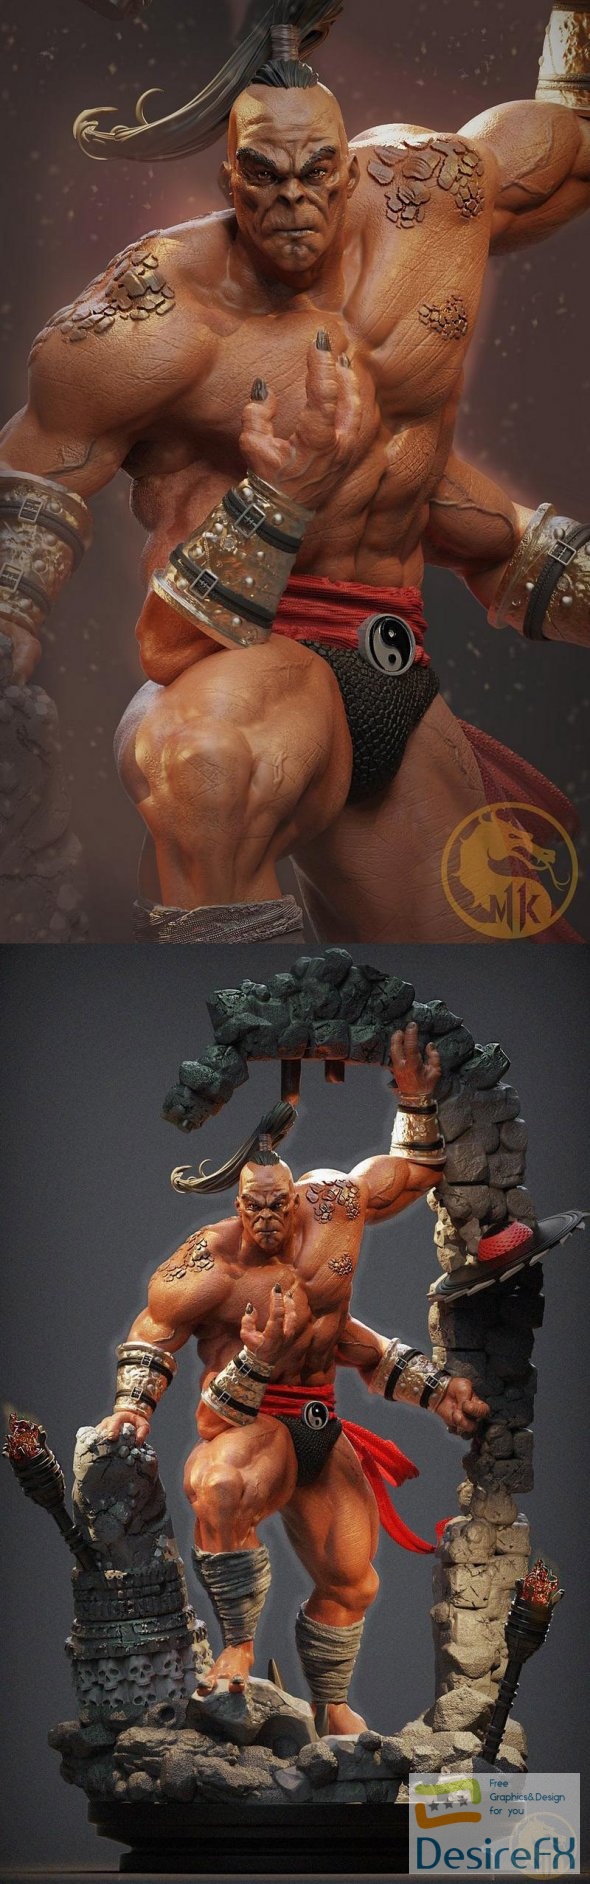 Goro from Mortal Kombat